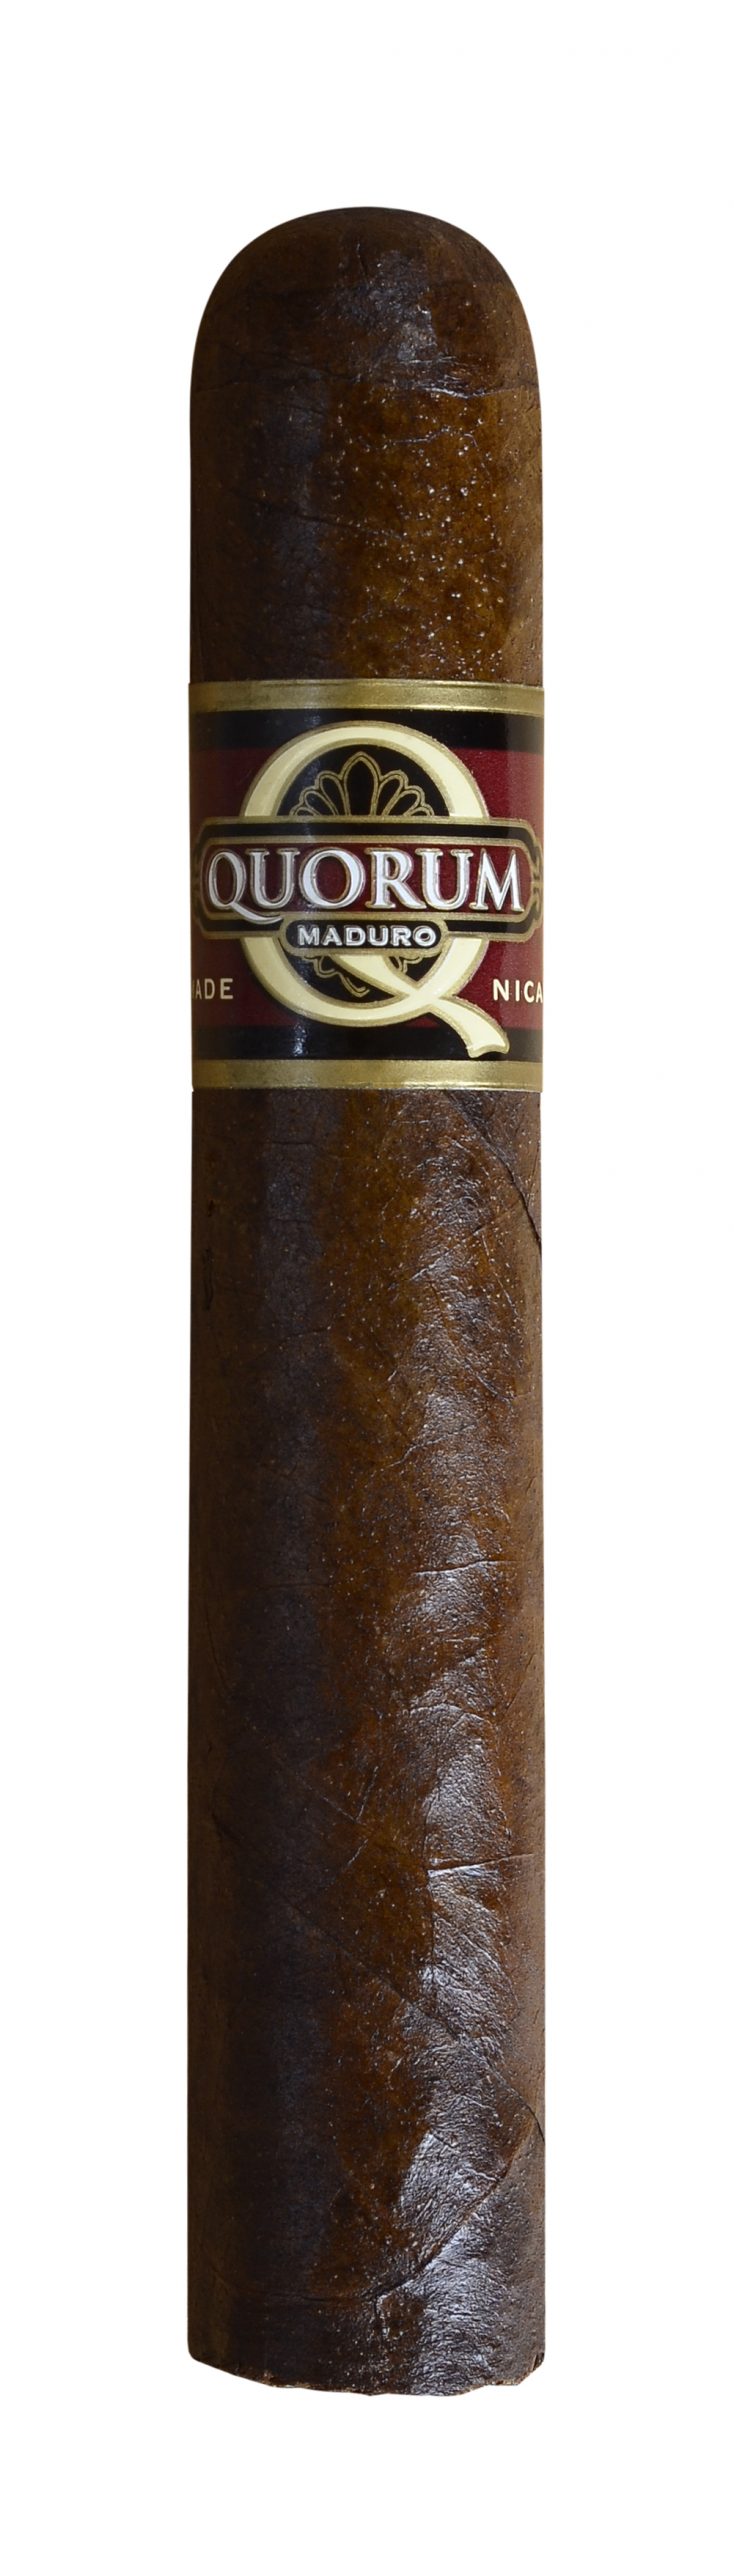 quorum maduro robusto single cigar